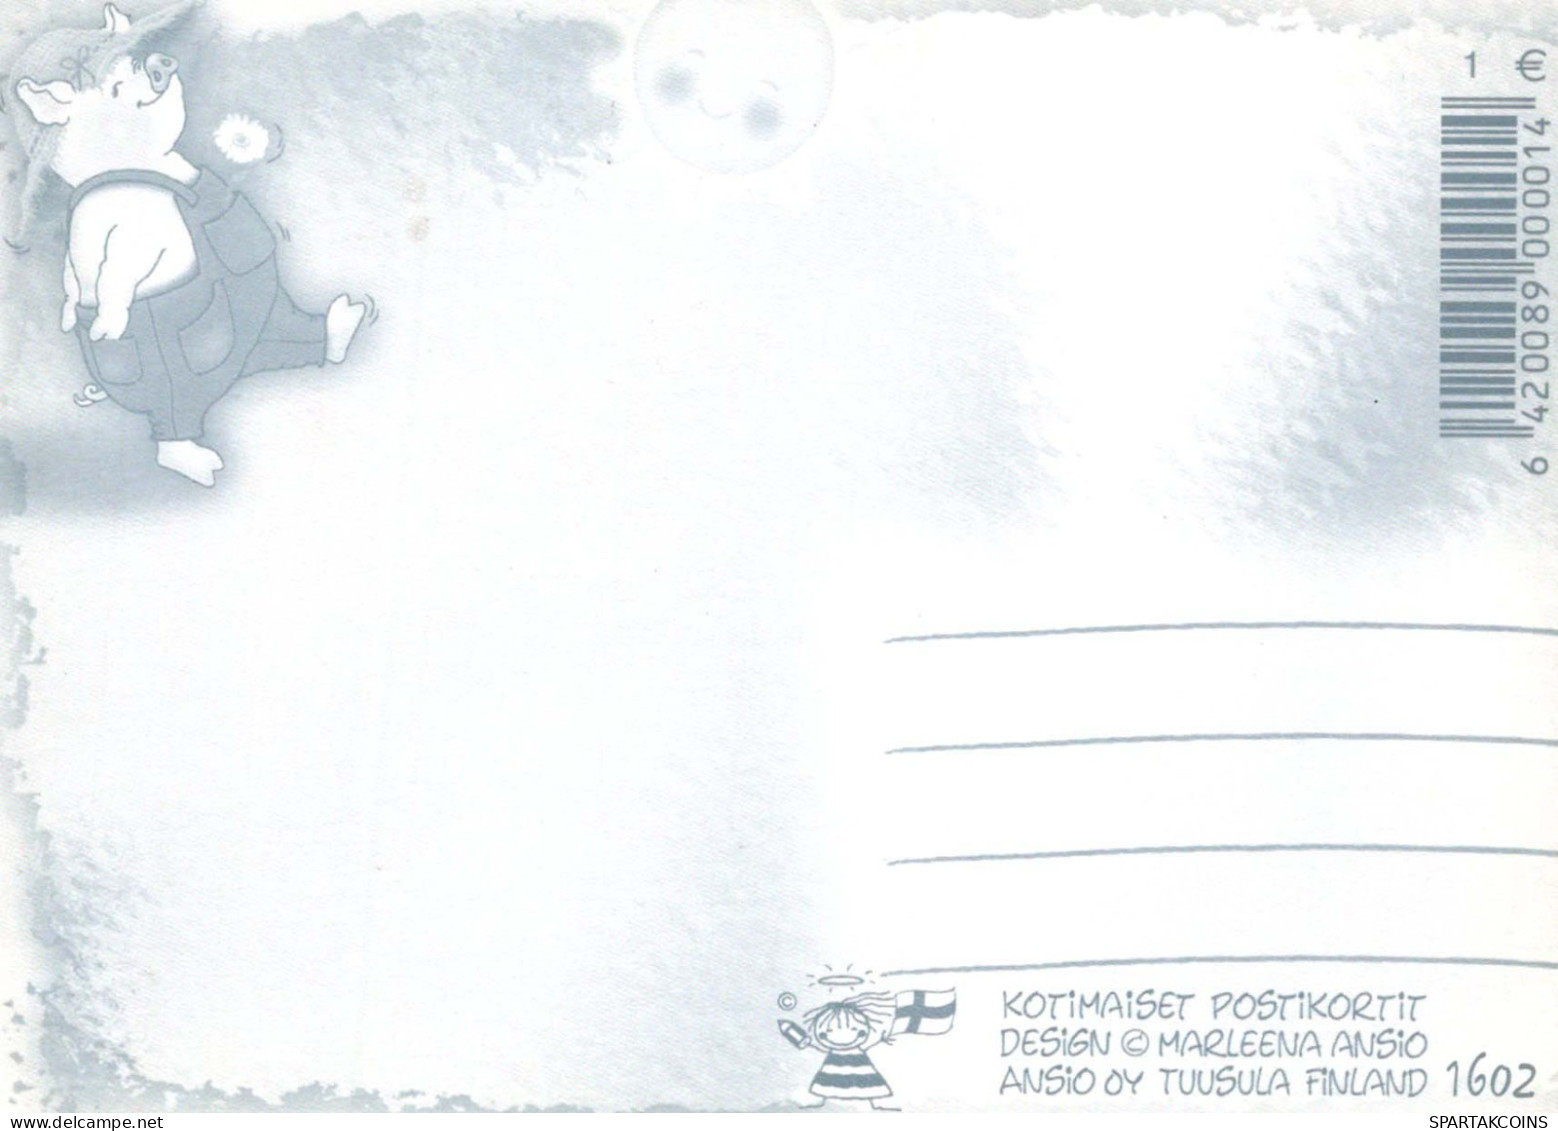 CERDOS Animales Vintage Tarjeta Postal CPSM #PBR760.A - Pigs